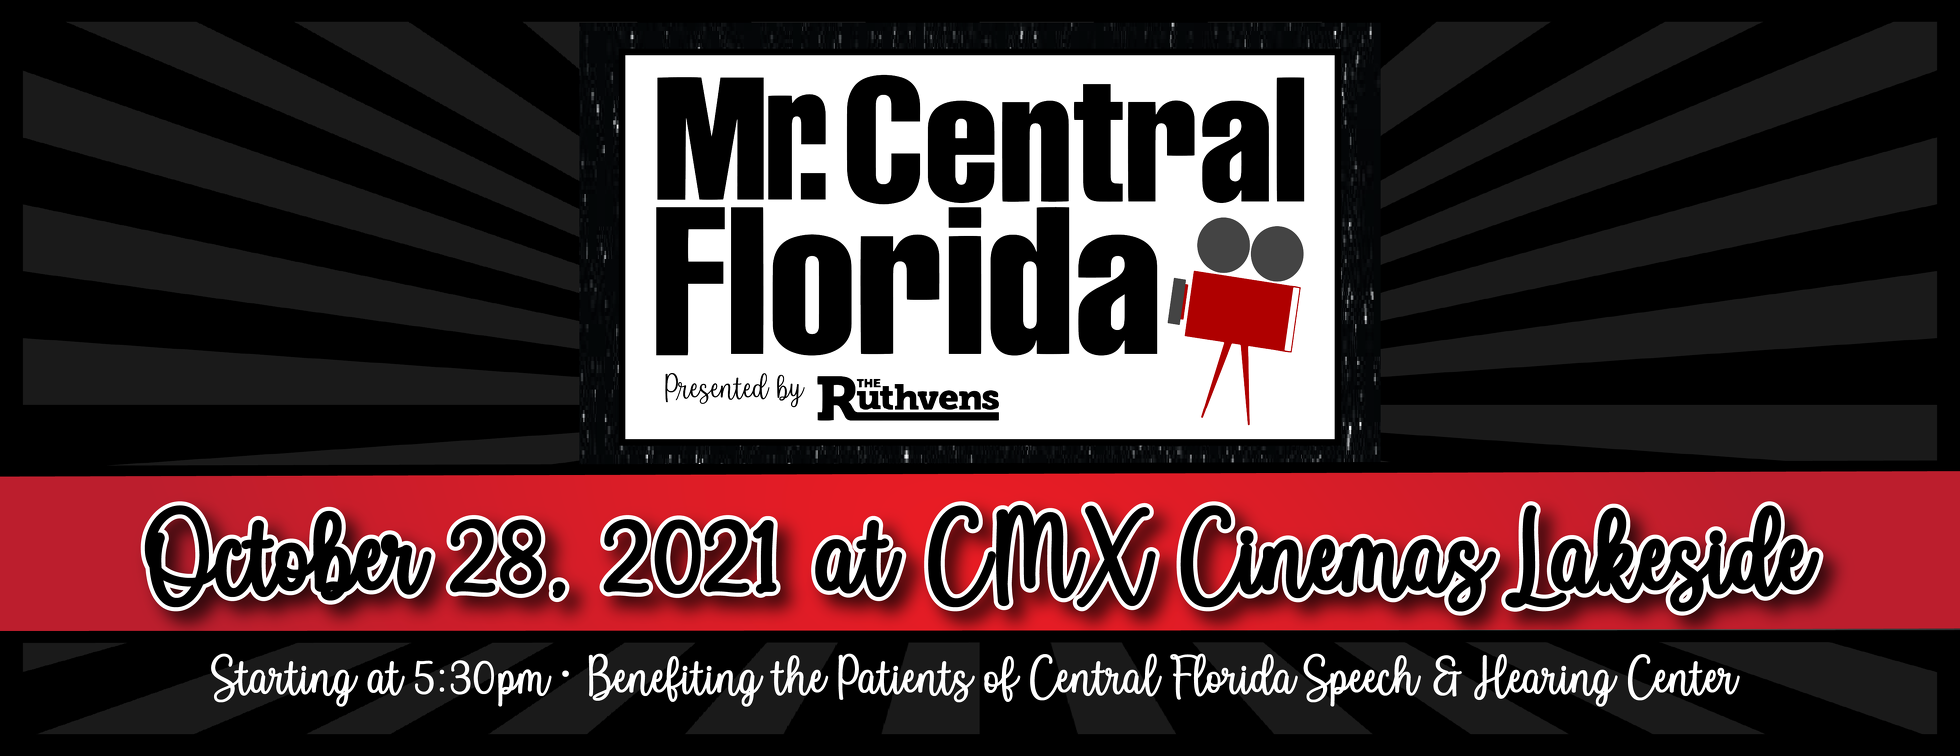 2021 Mr. Central Florida Auction